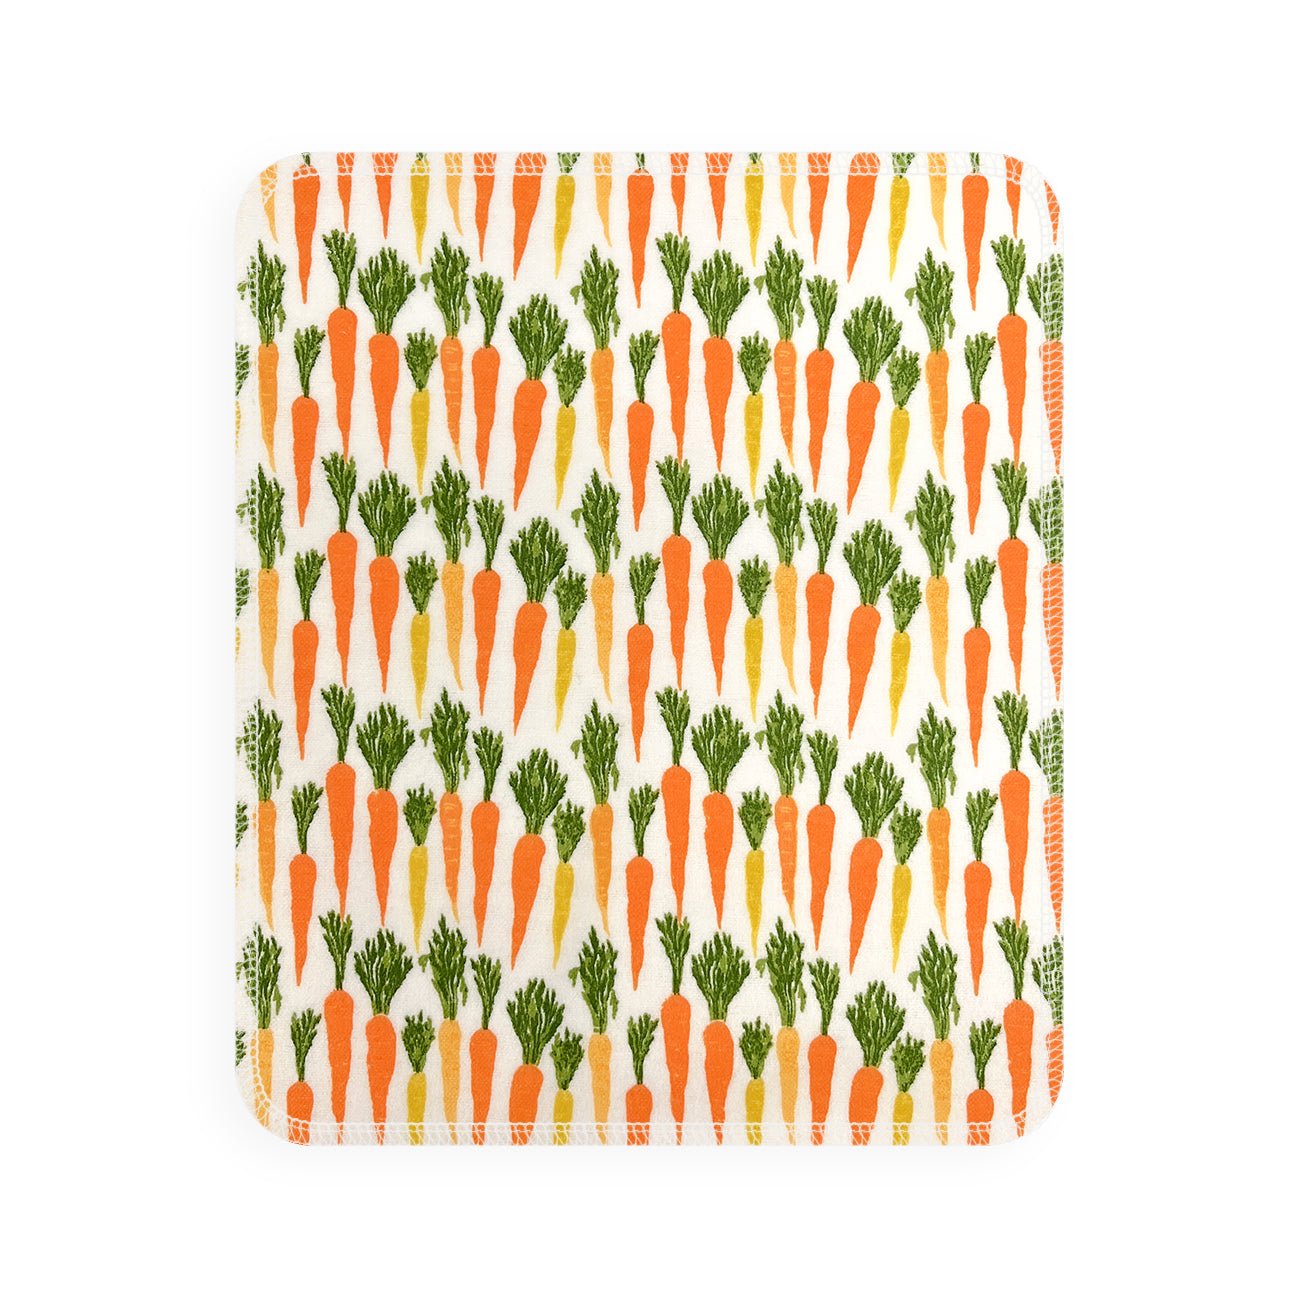 Marley's Monsters UNpaper® Towel Single: Carrots